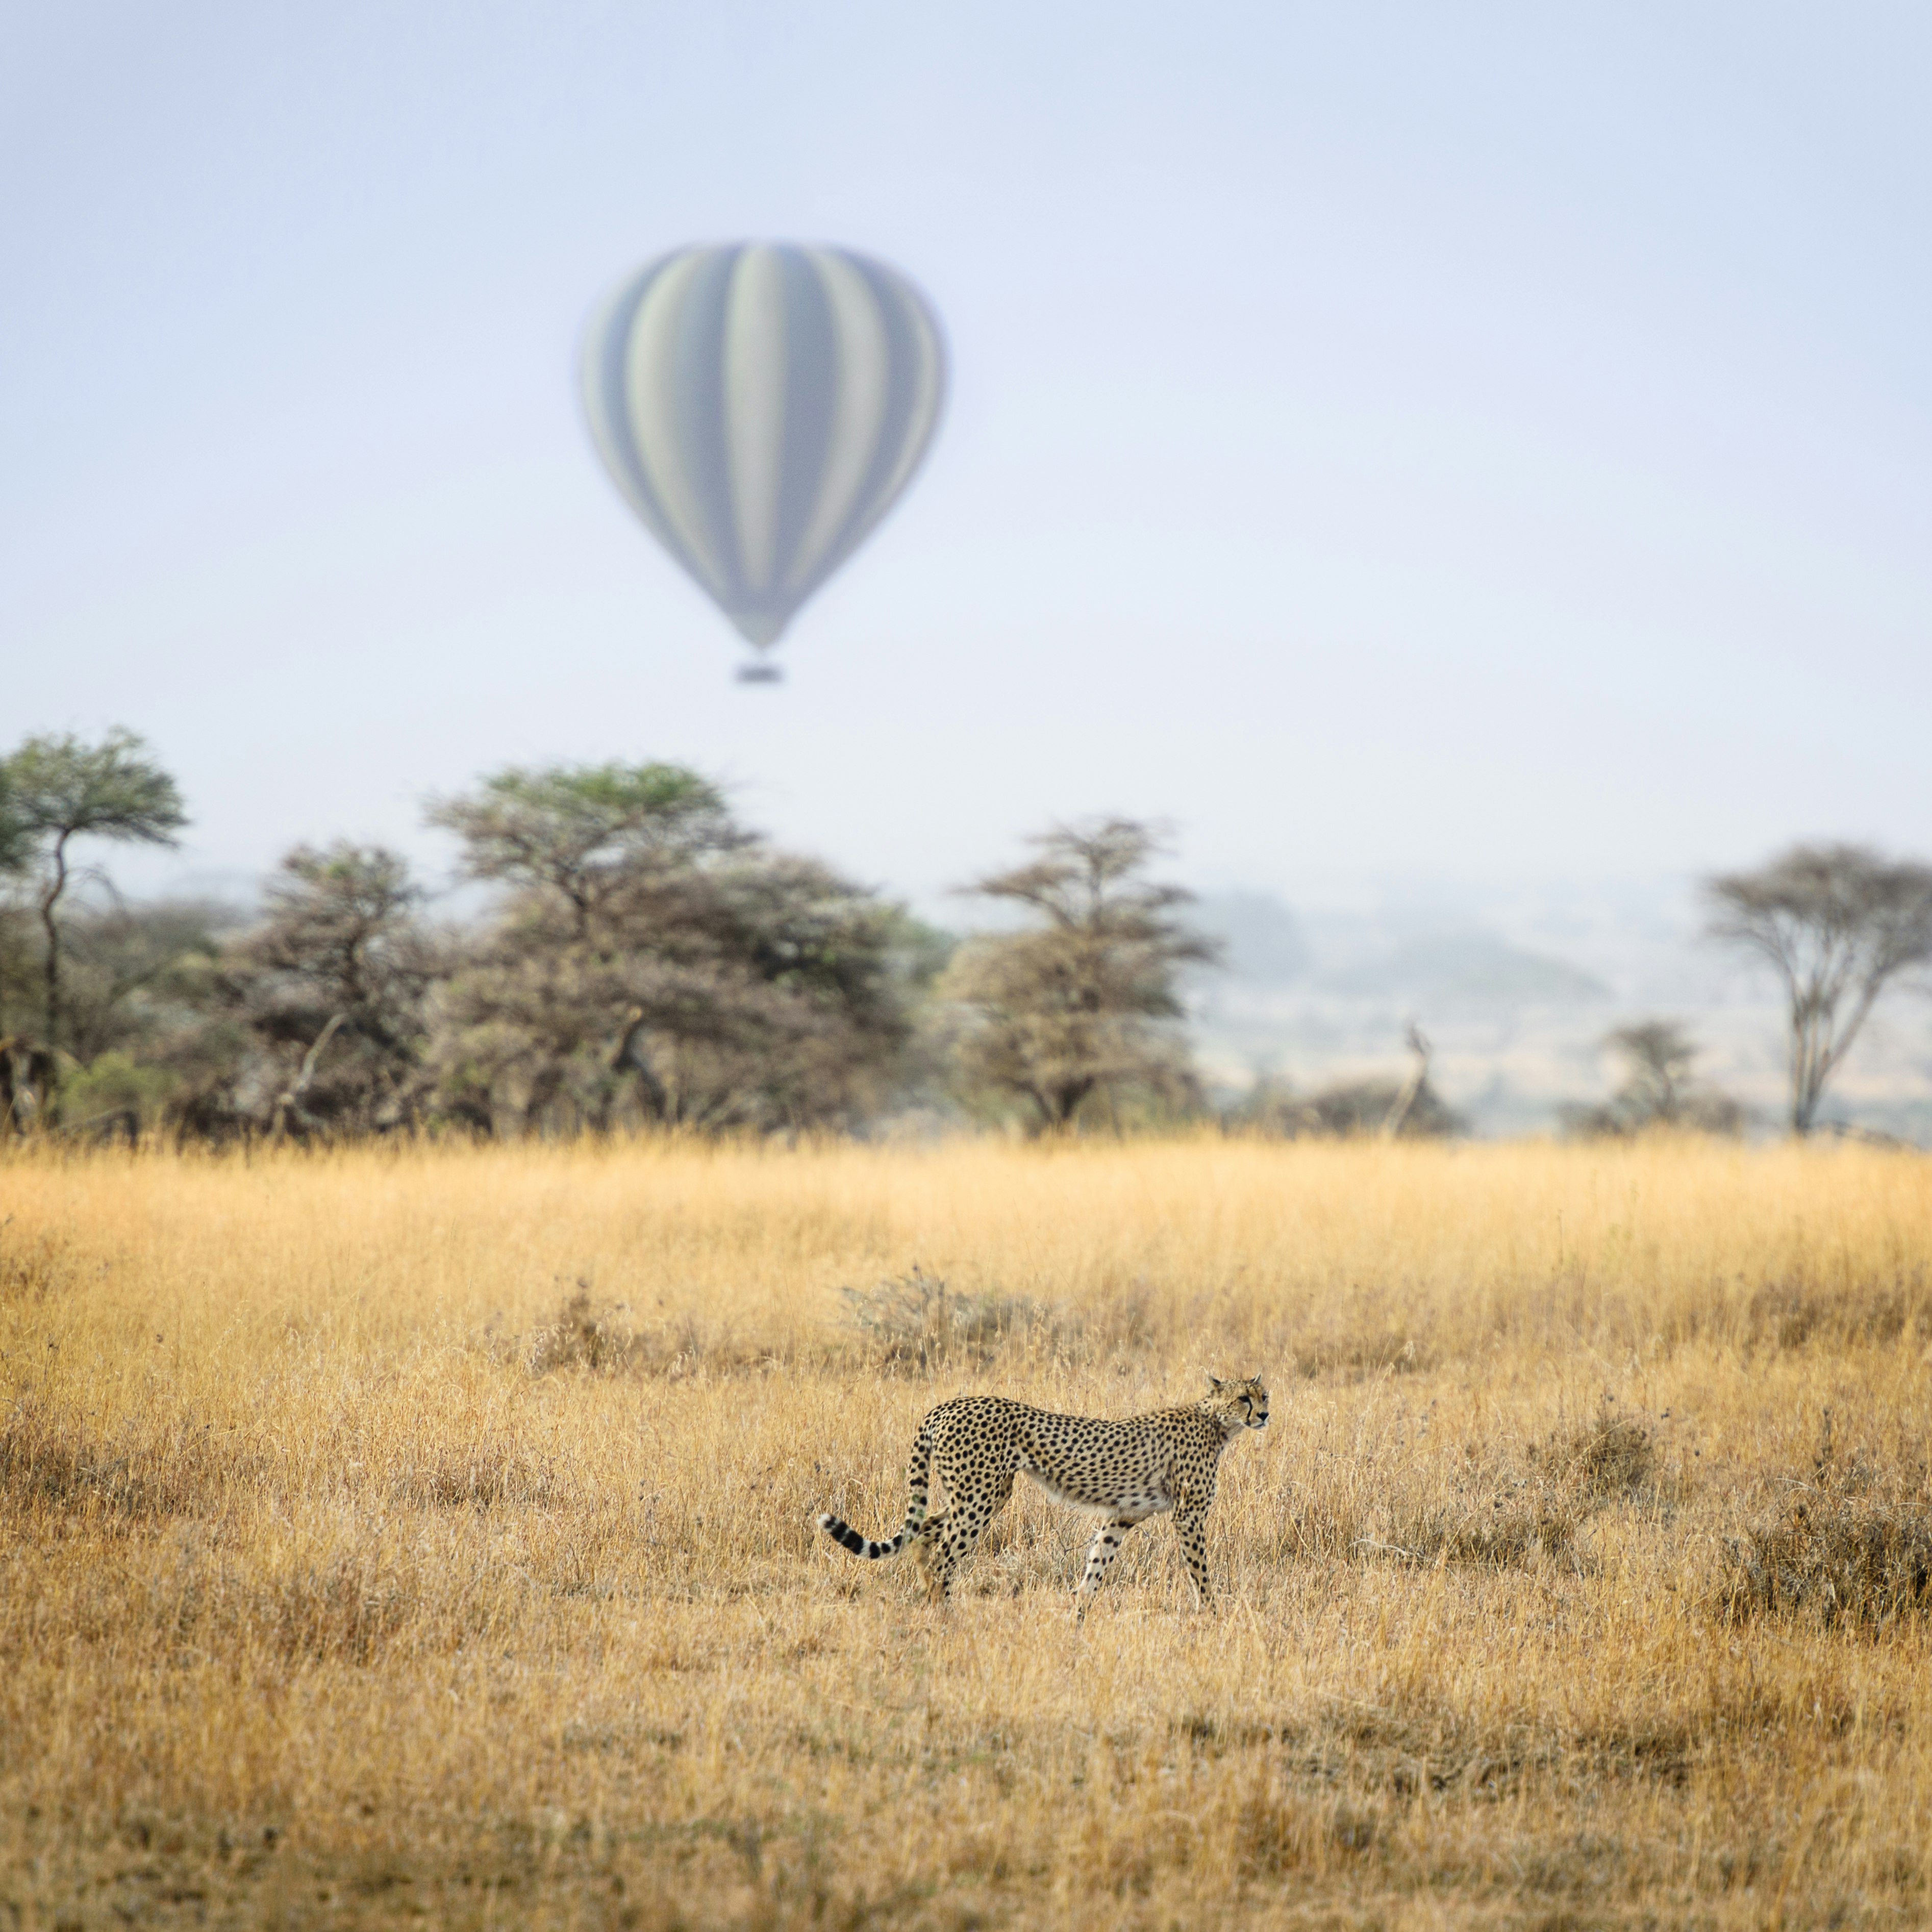 cheetah standing on grass plains during daytime